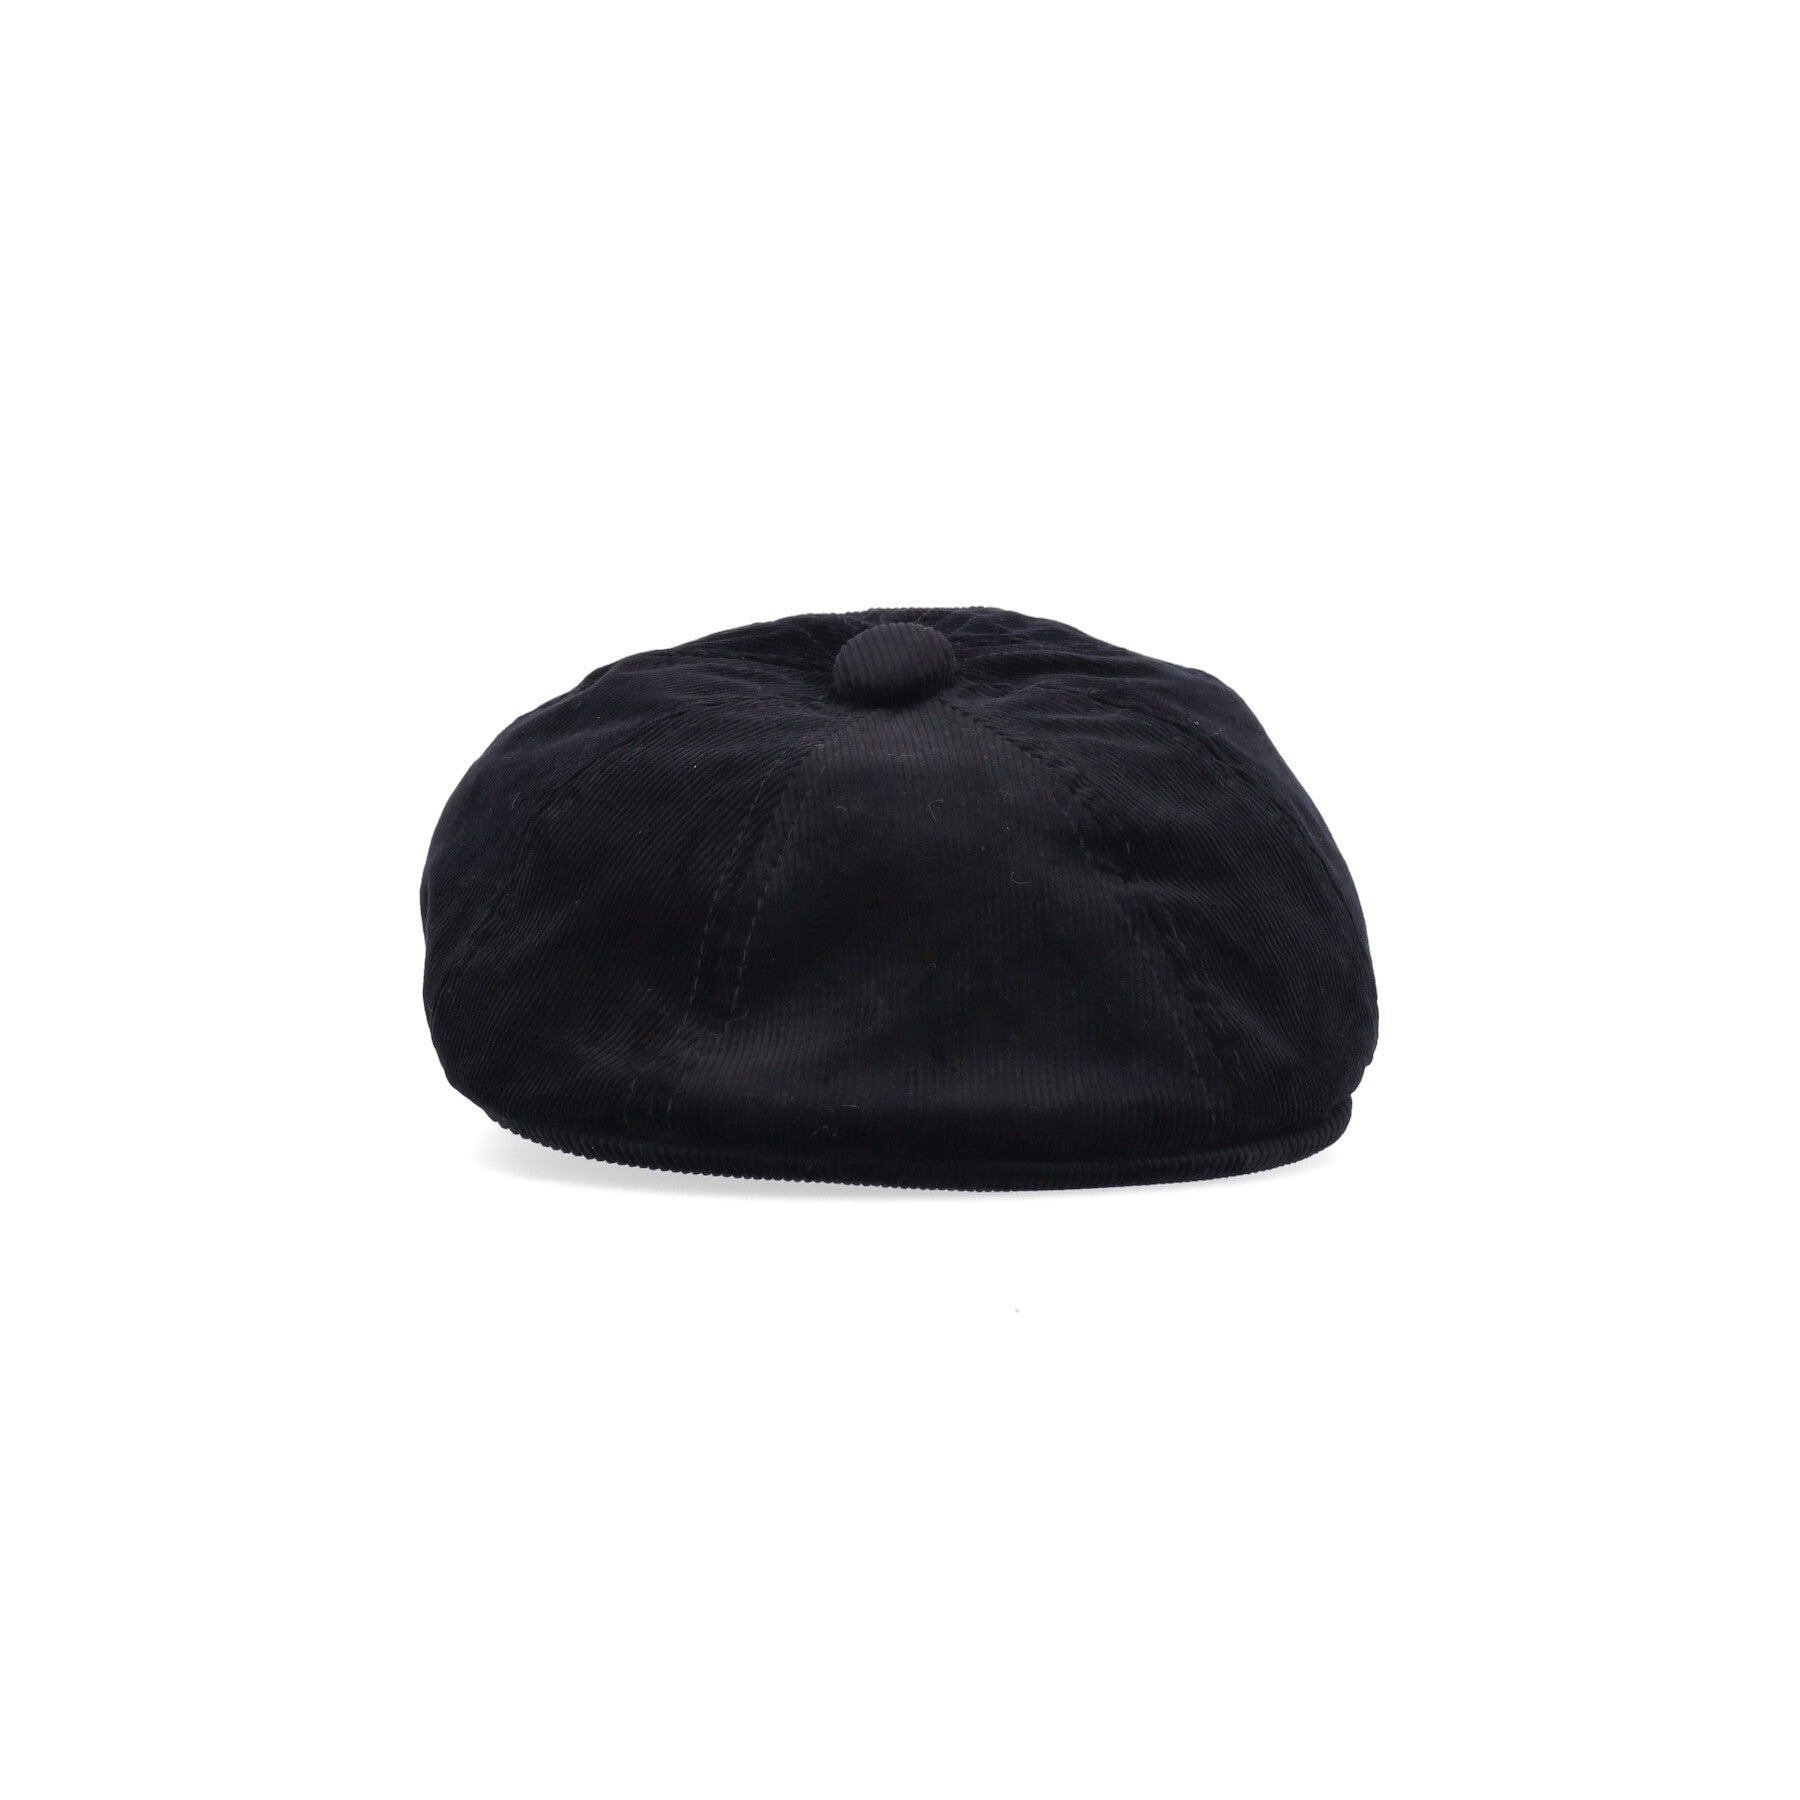 Cord Hawker Black Men's Hat